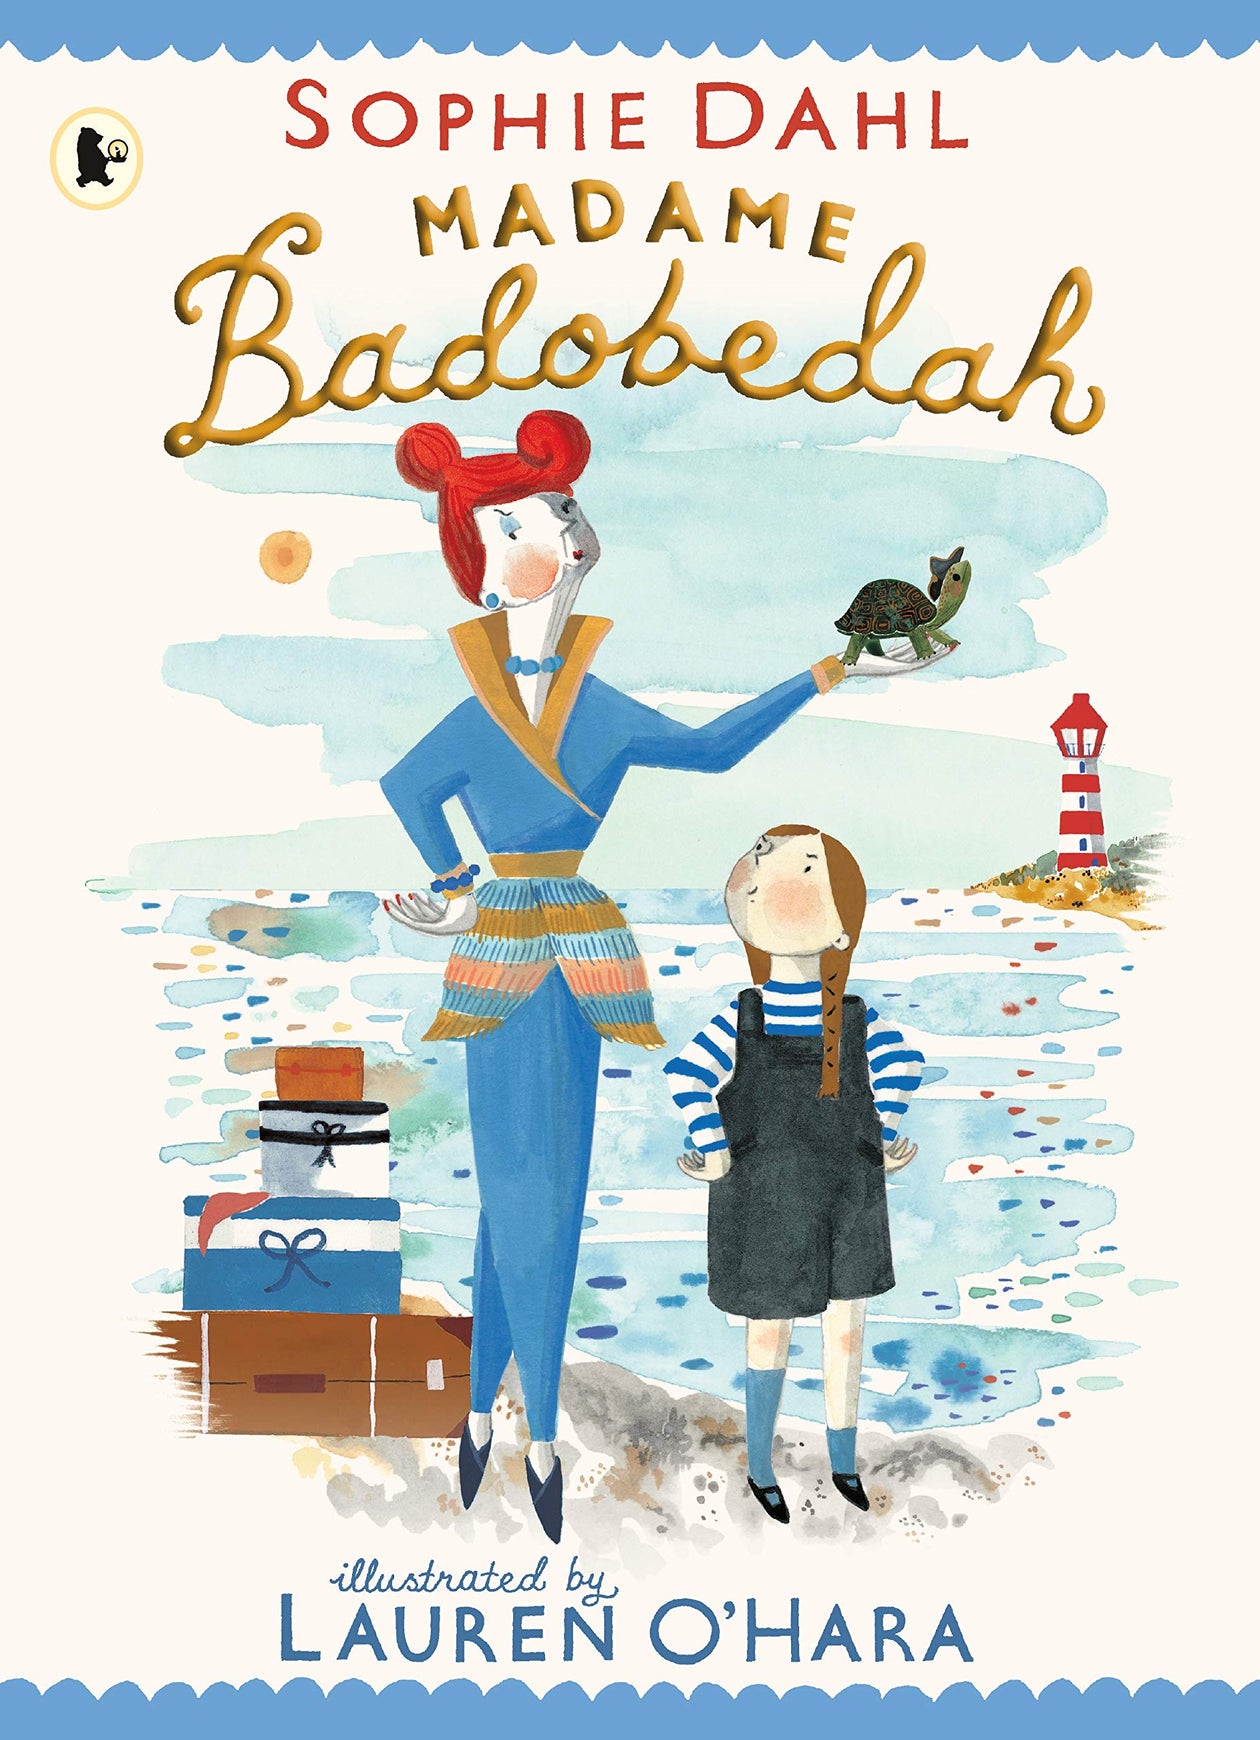 Madame Badobedah by Sophie Dahl, illustrated by Lauren O'Hara